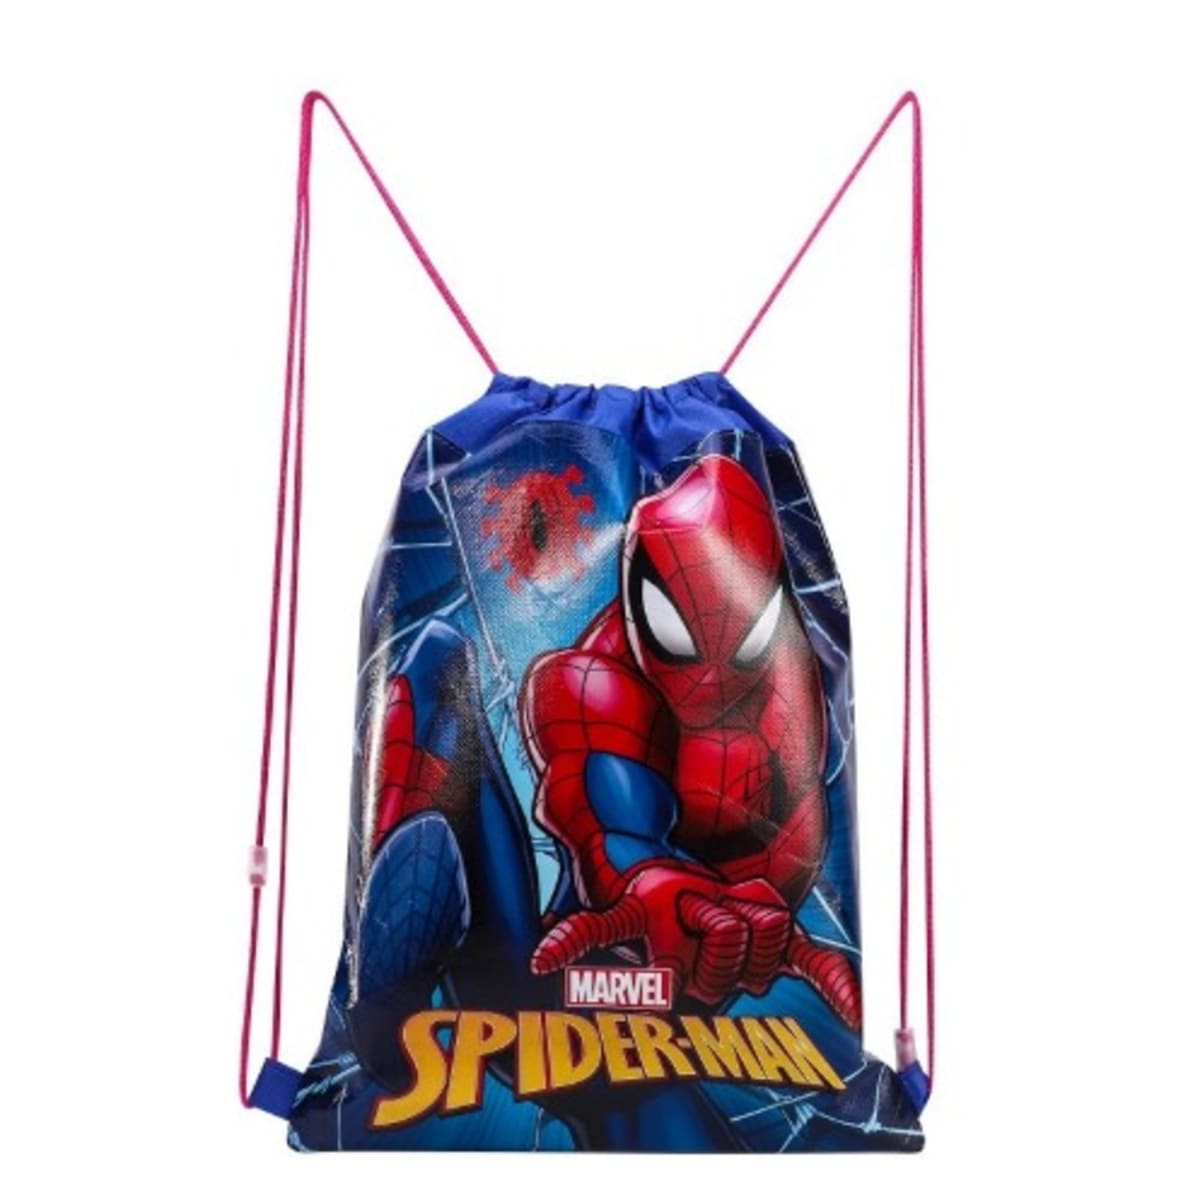 Marvel Spiderman Pull String Bag